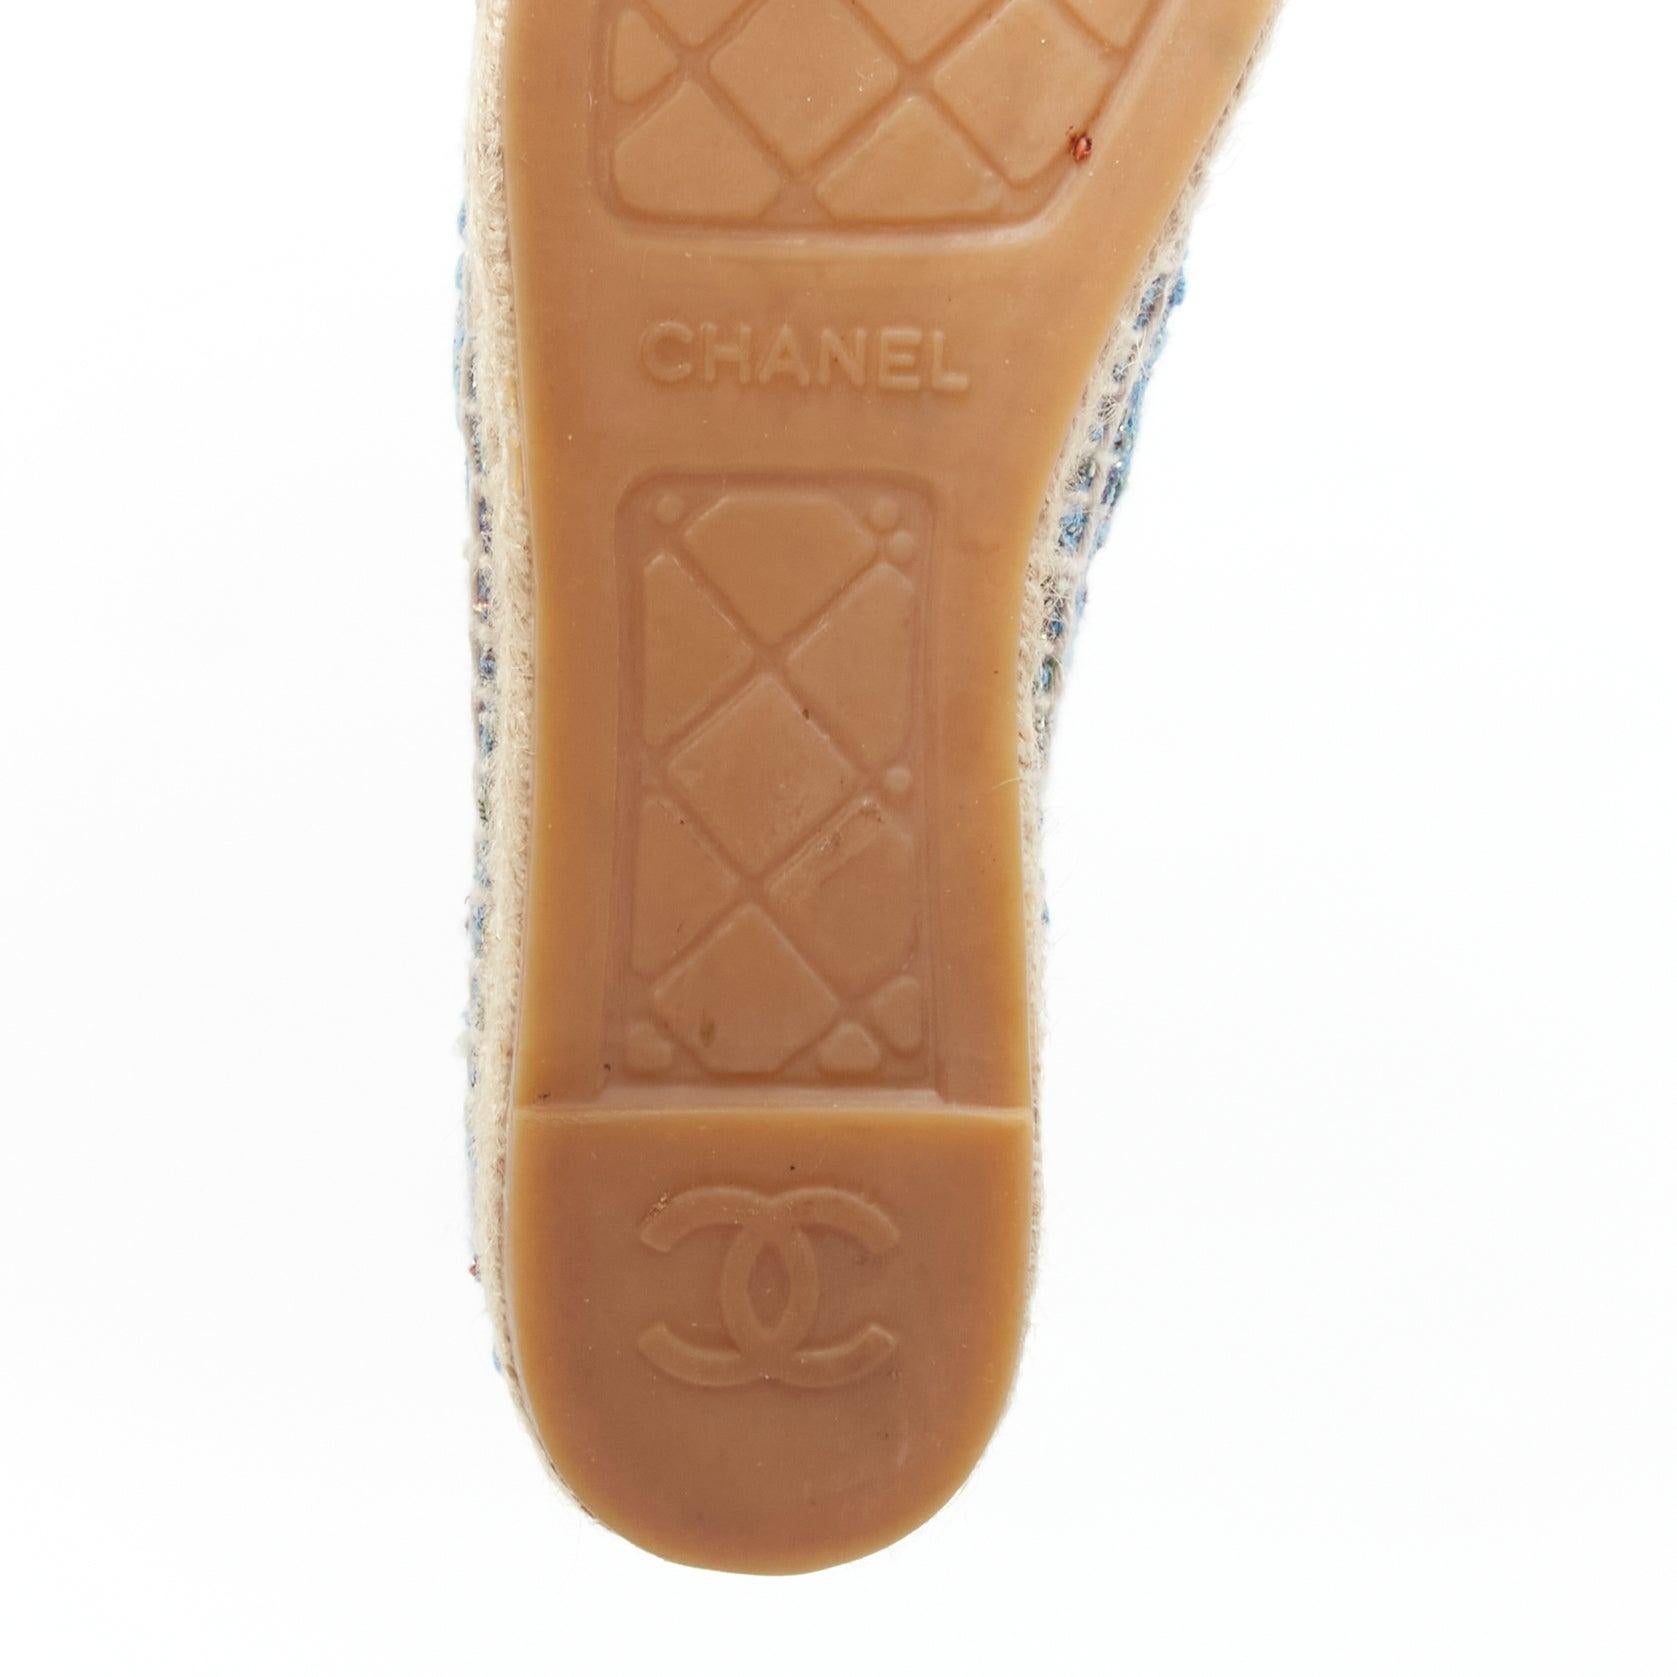 CHANEL blue tweed CC logo leather toe cap espadrille shoes EU40 4